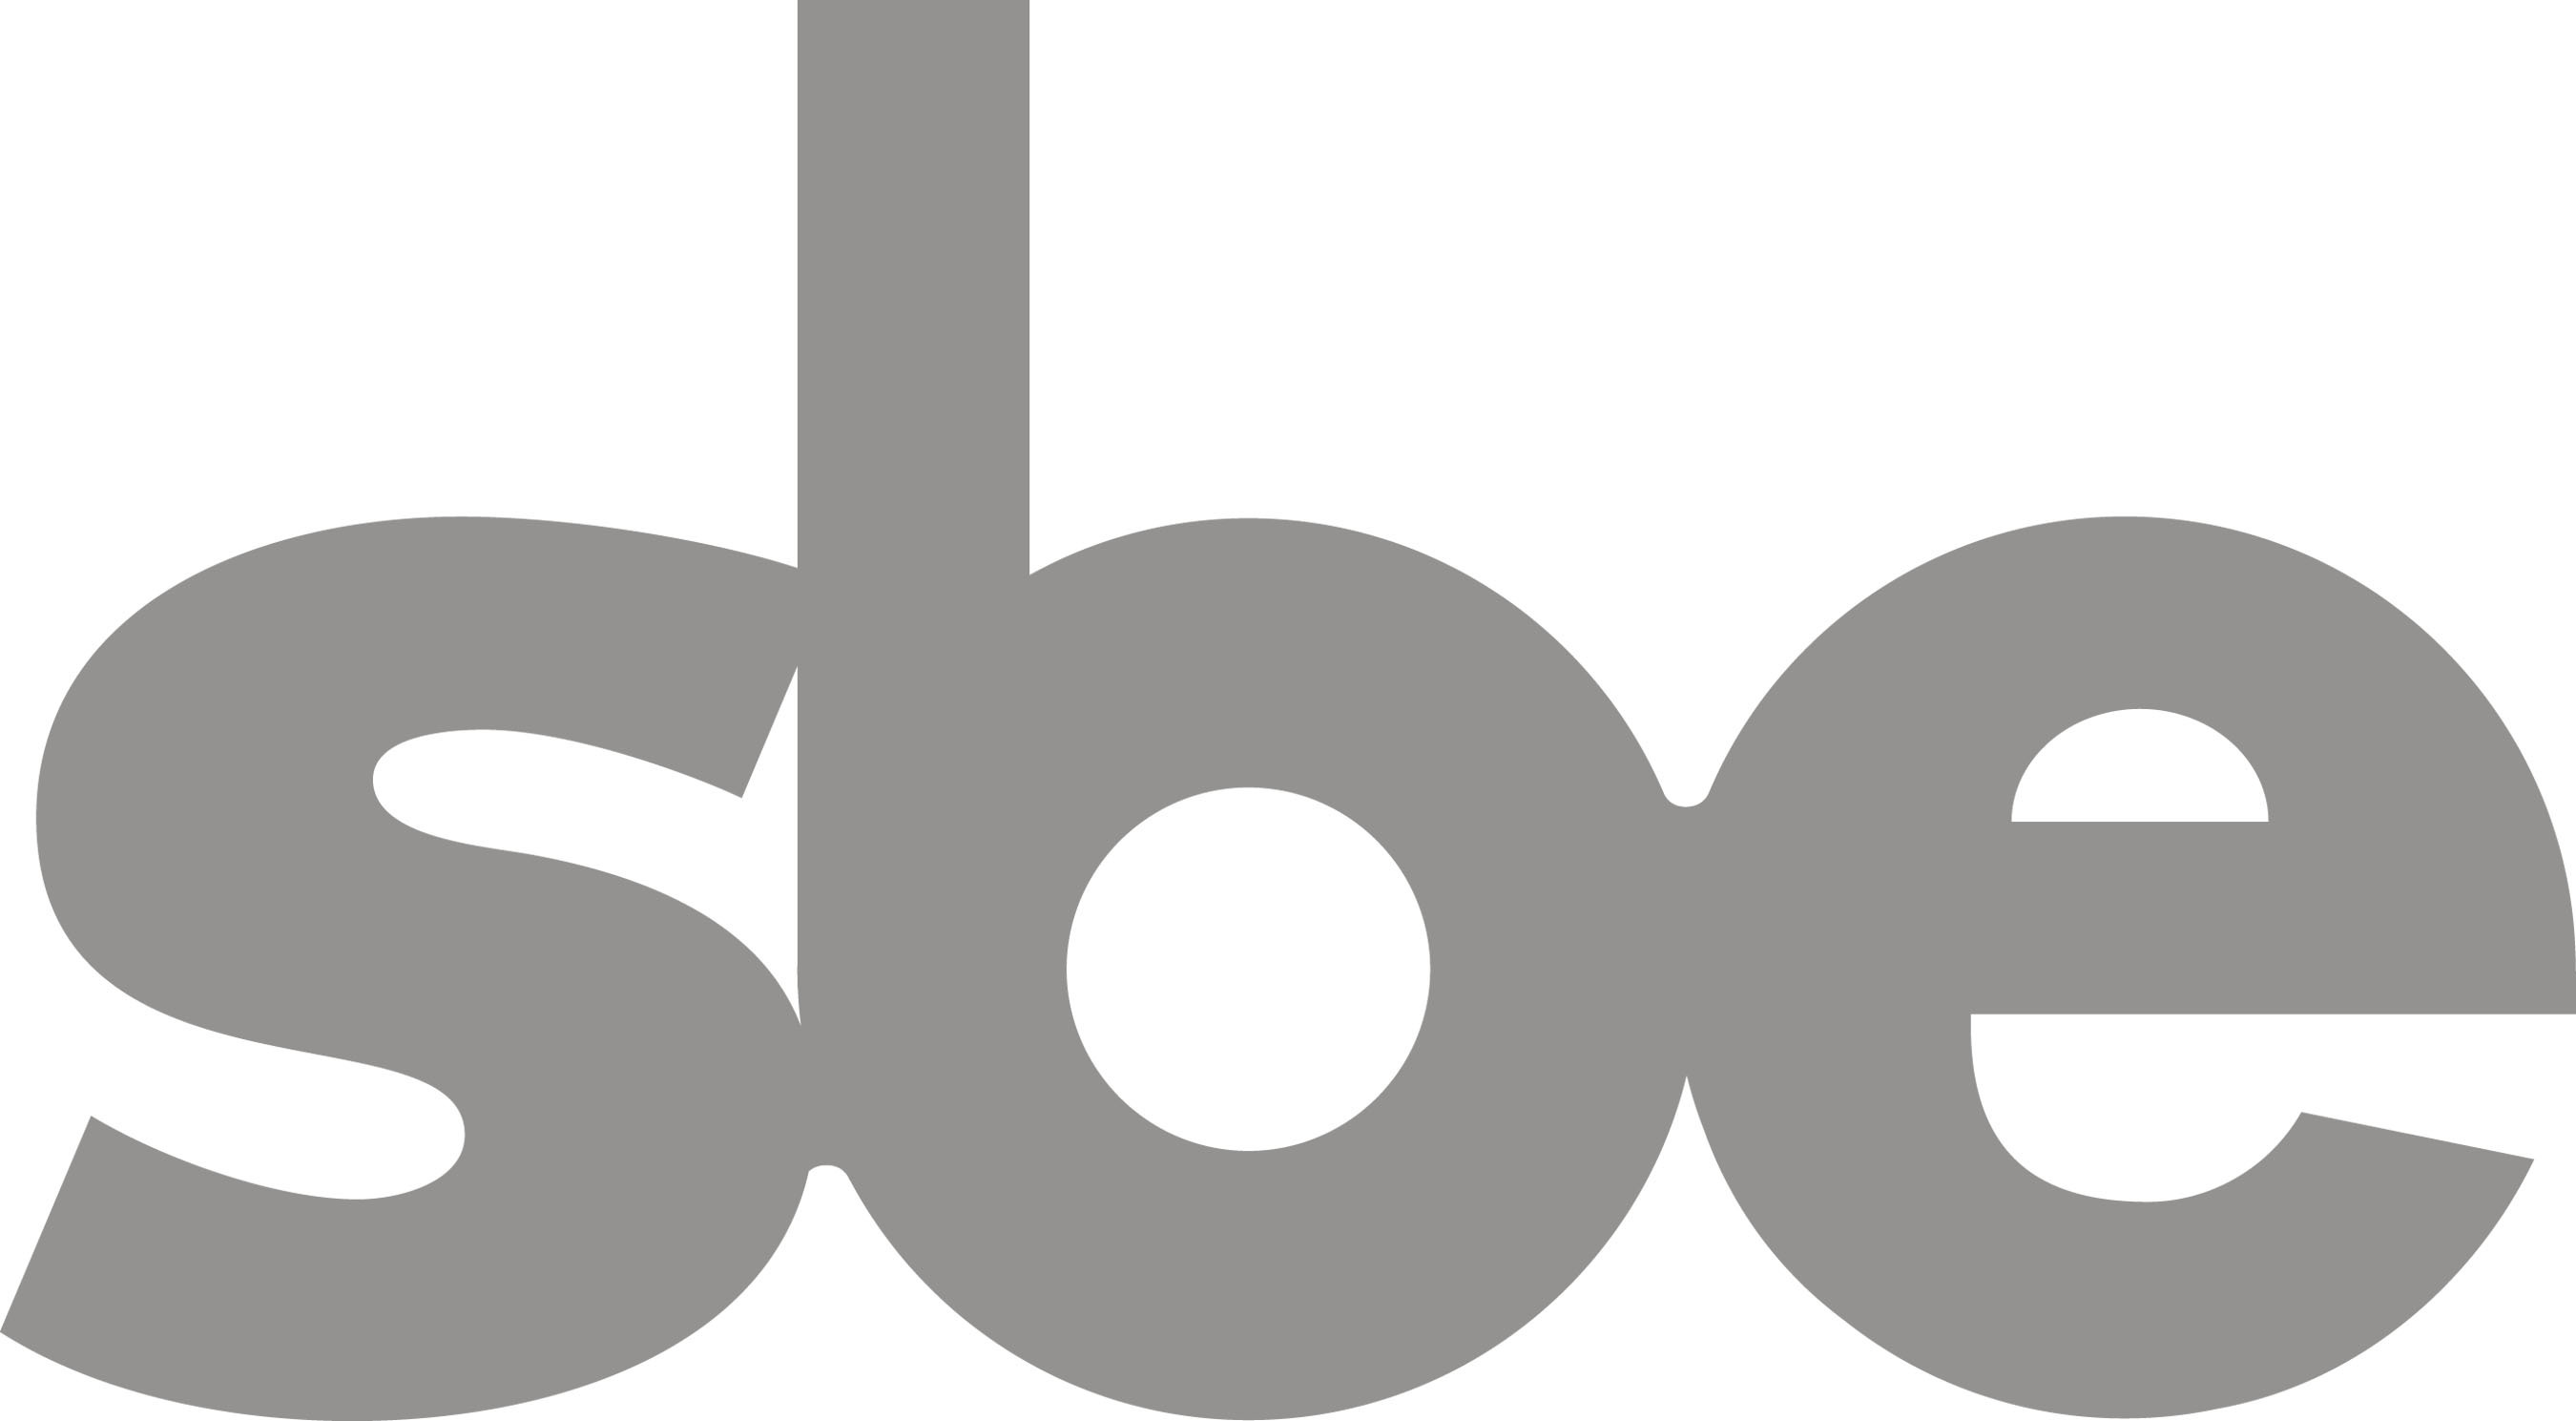 sbe logo